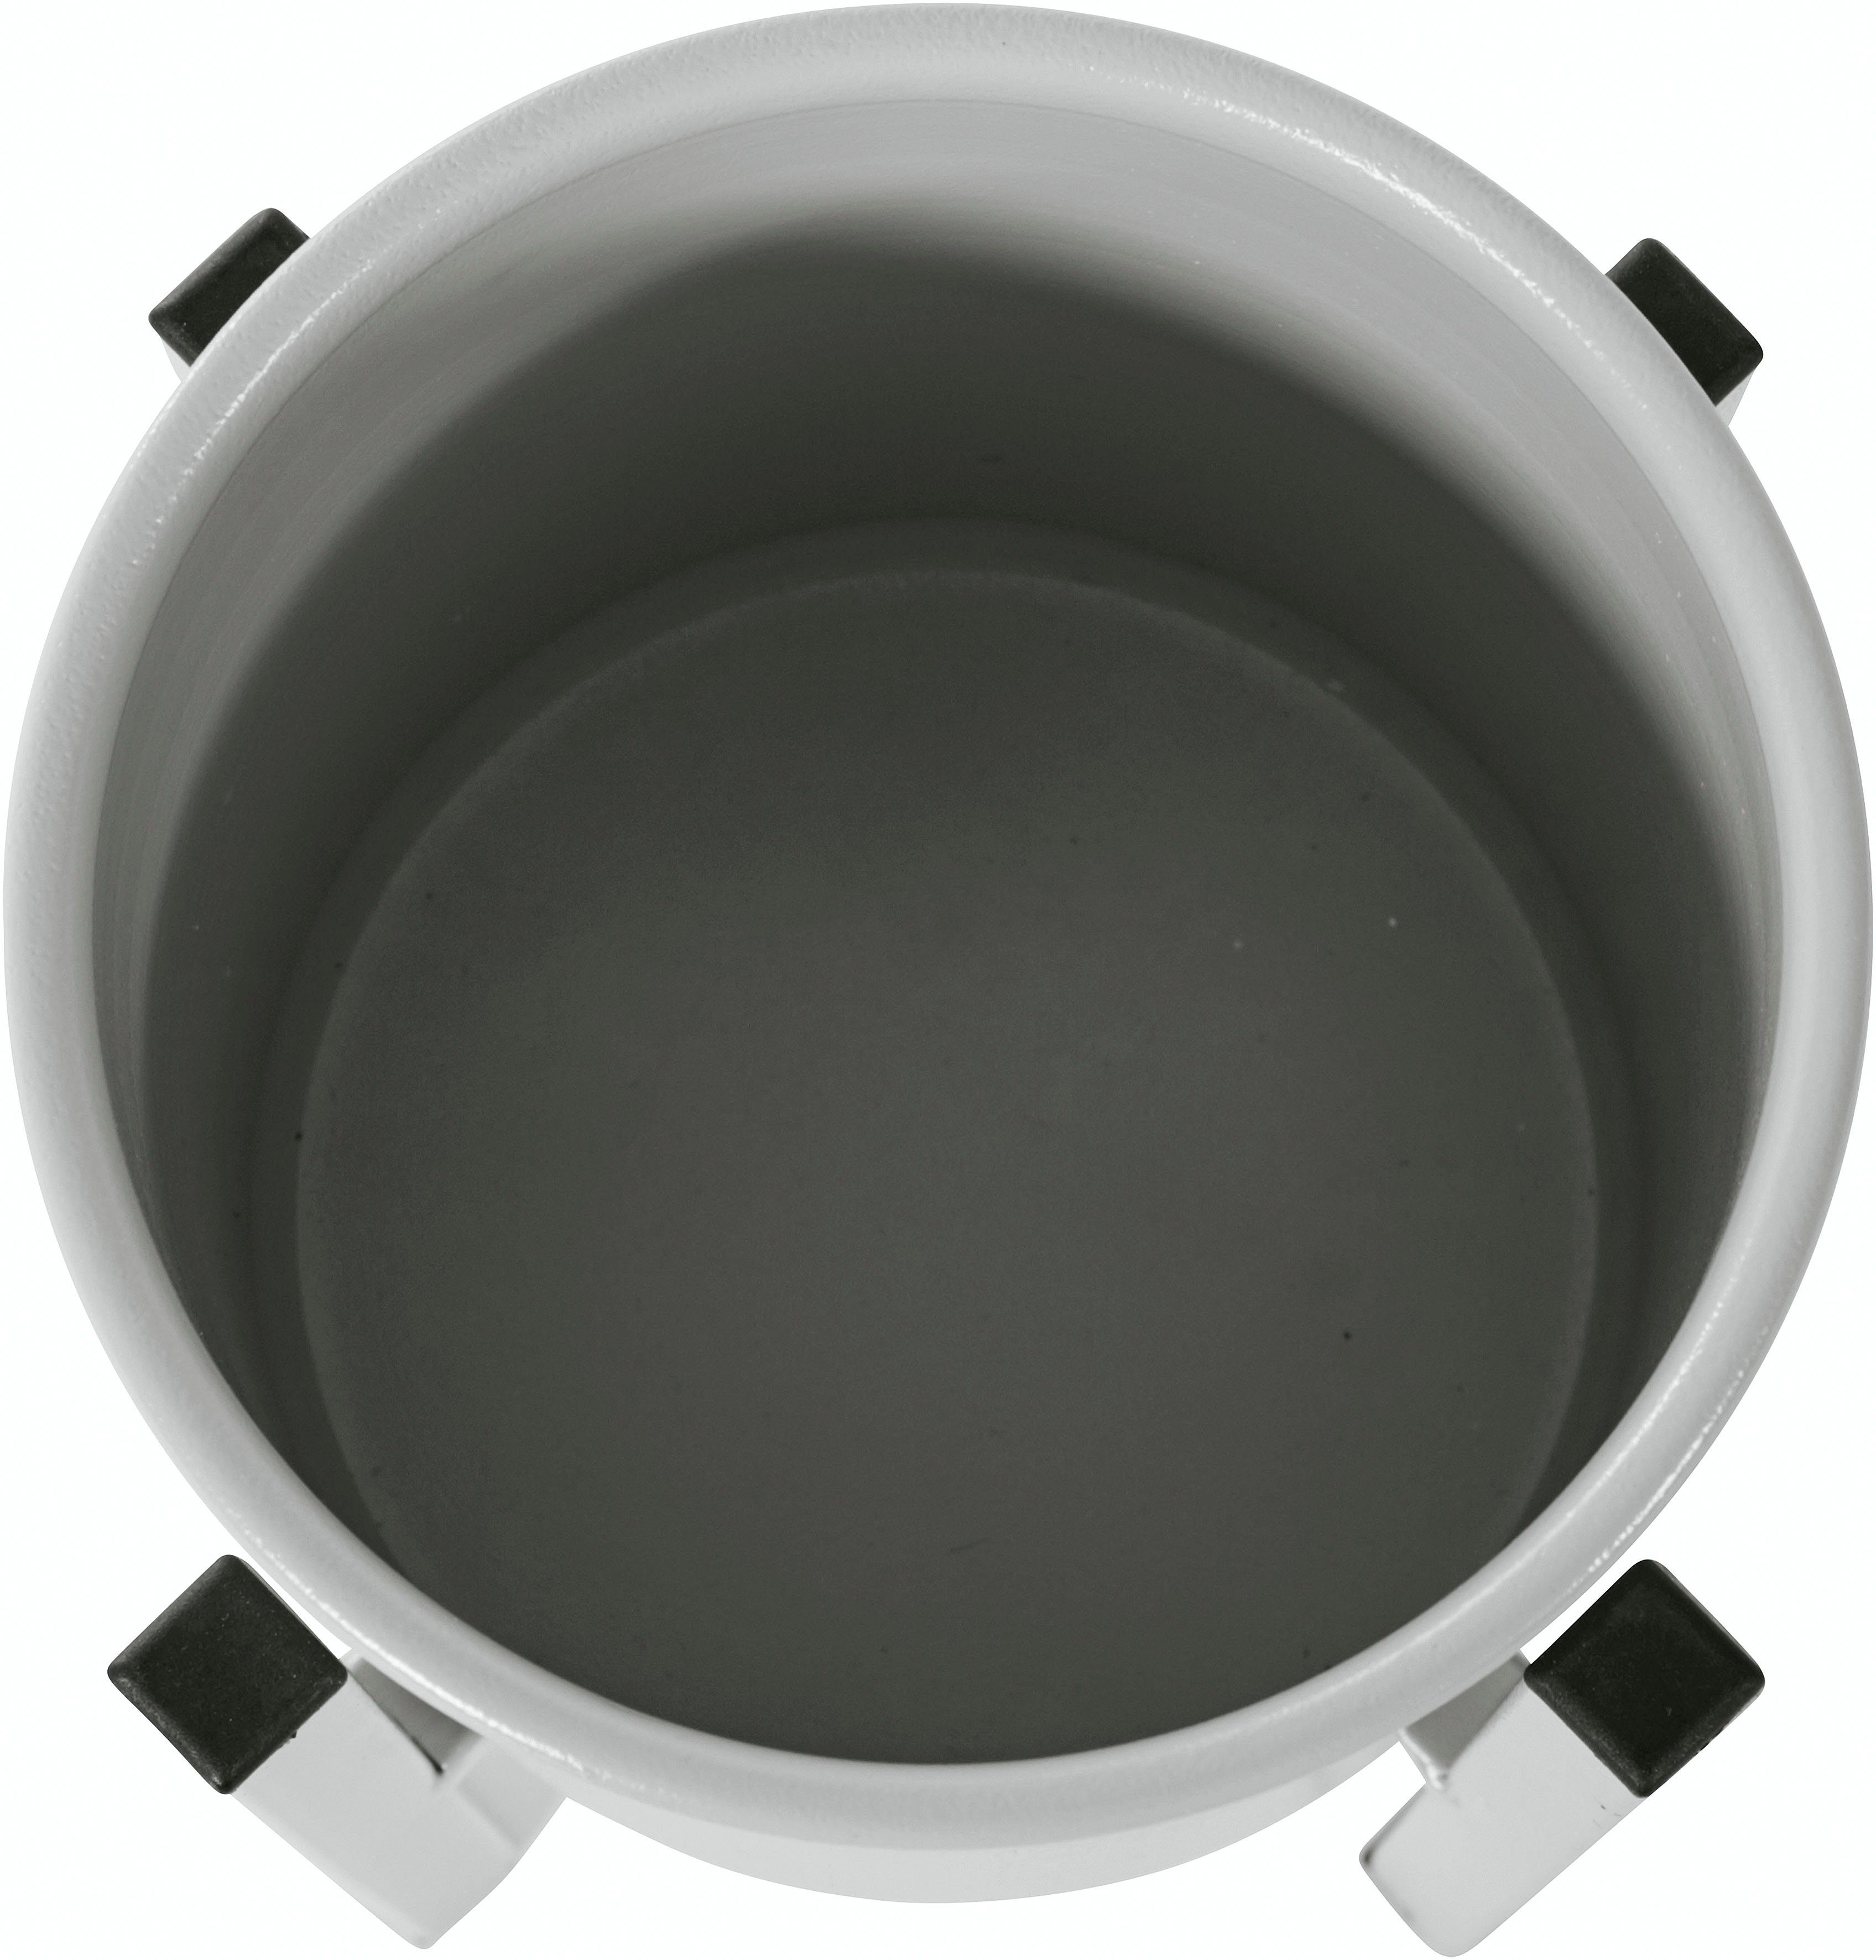 andas schwarz, aus Pajala (3er-Set), grau Metall, Übertopf